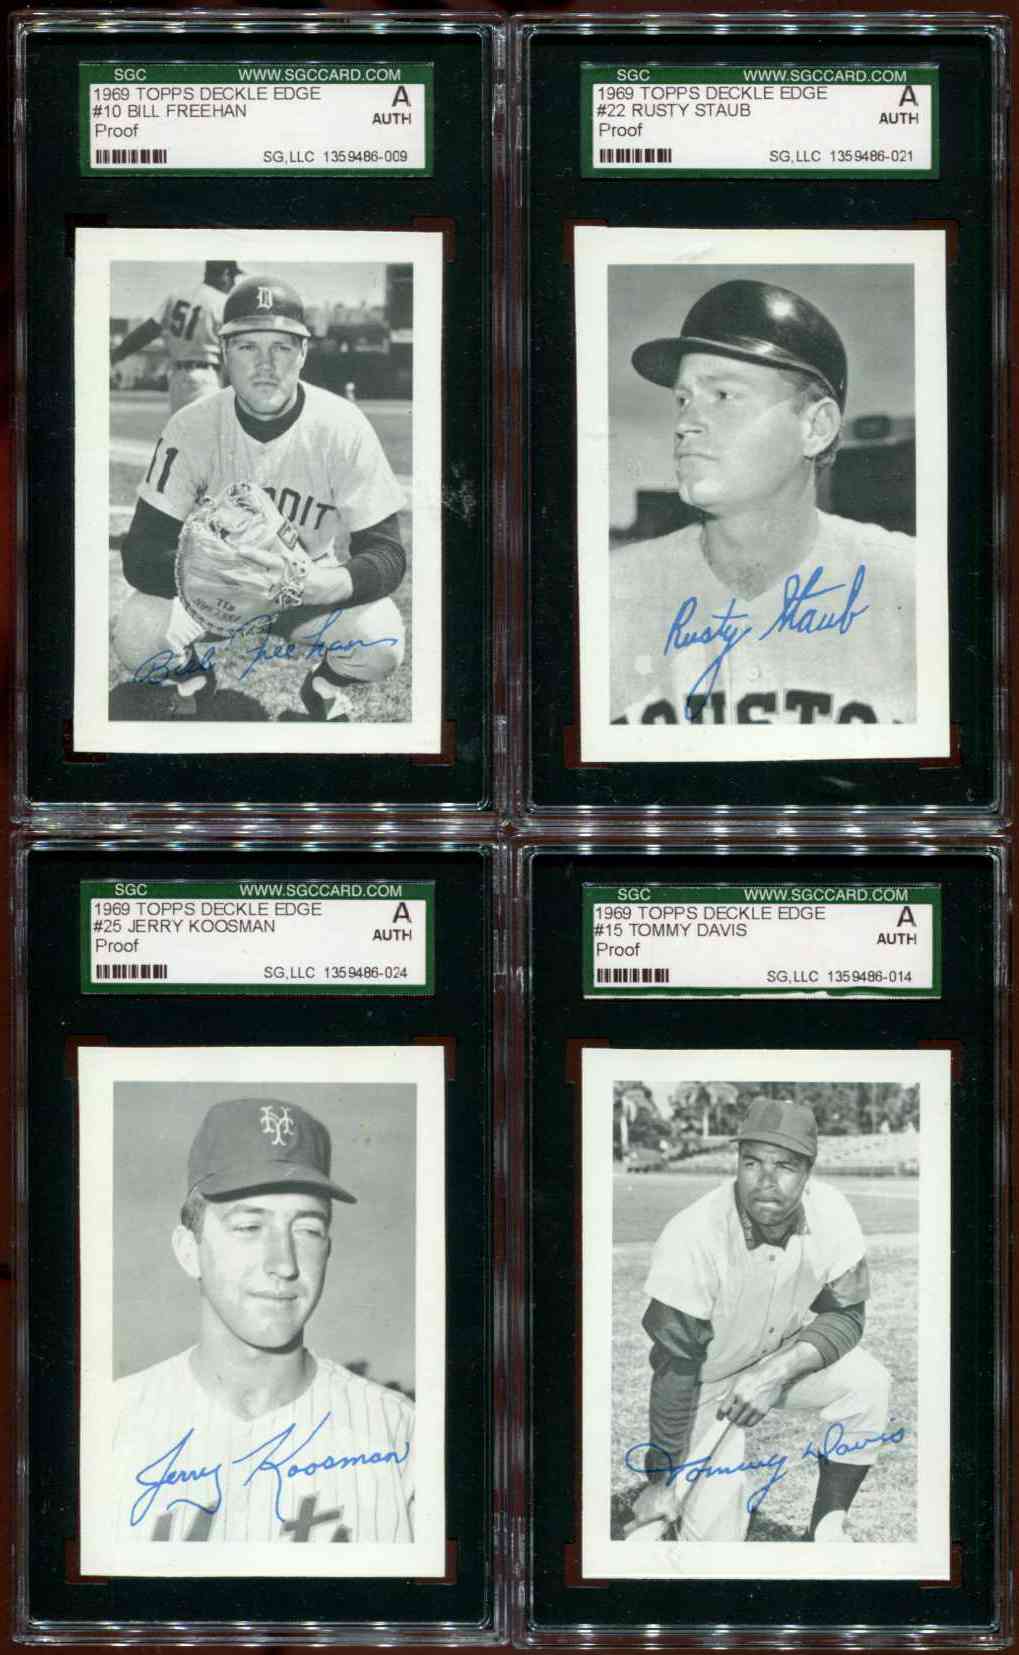 1969 Topps DECKLE EDGE  PROOF #25 Jerry Koosman (Mets) Baseball cards value